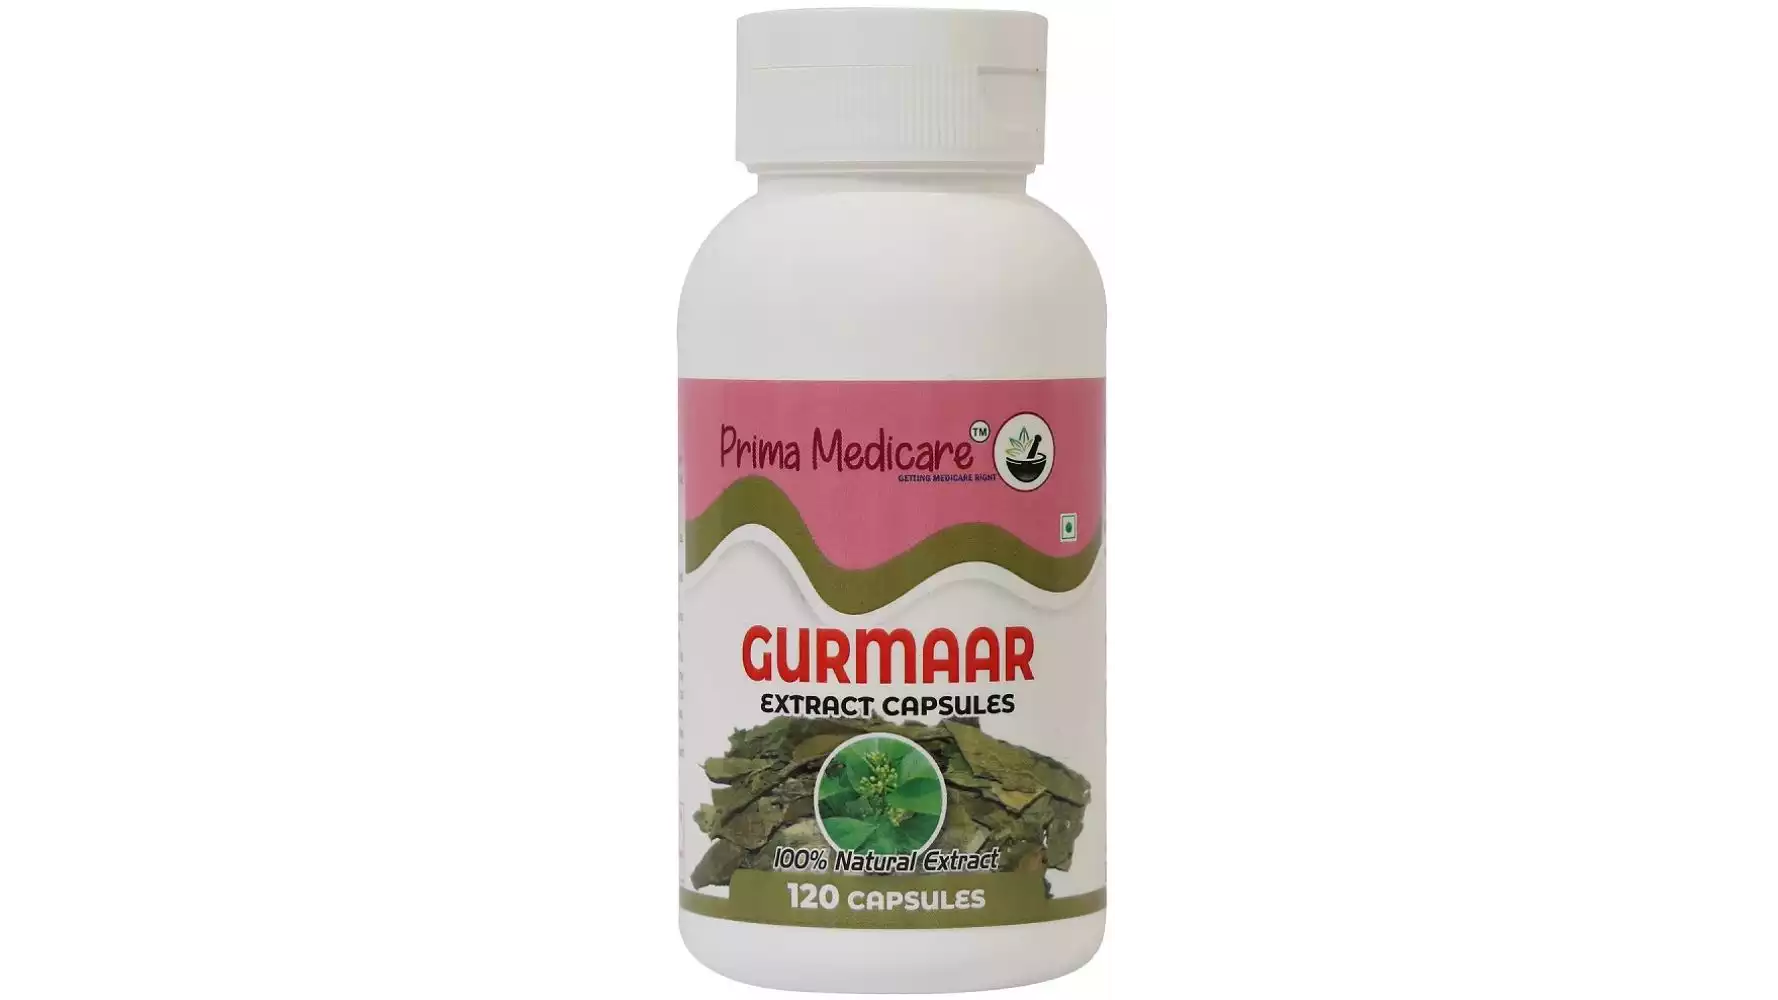 Prima Medicare Gurmaar Extract Capsules (120caps)